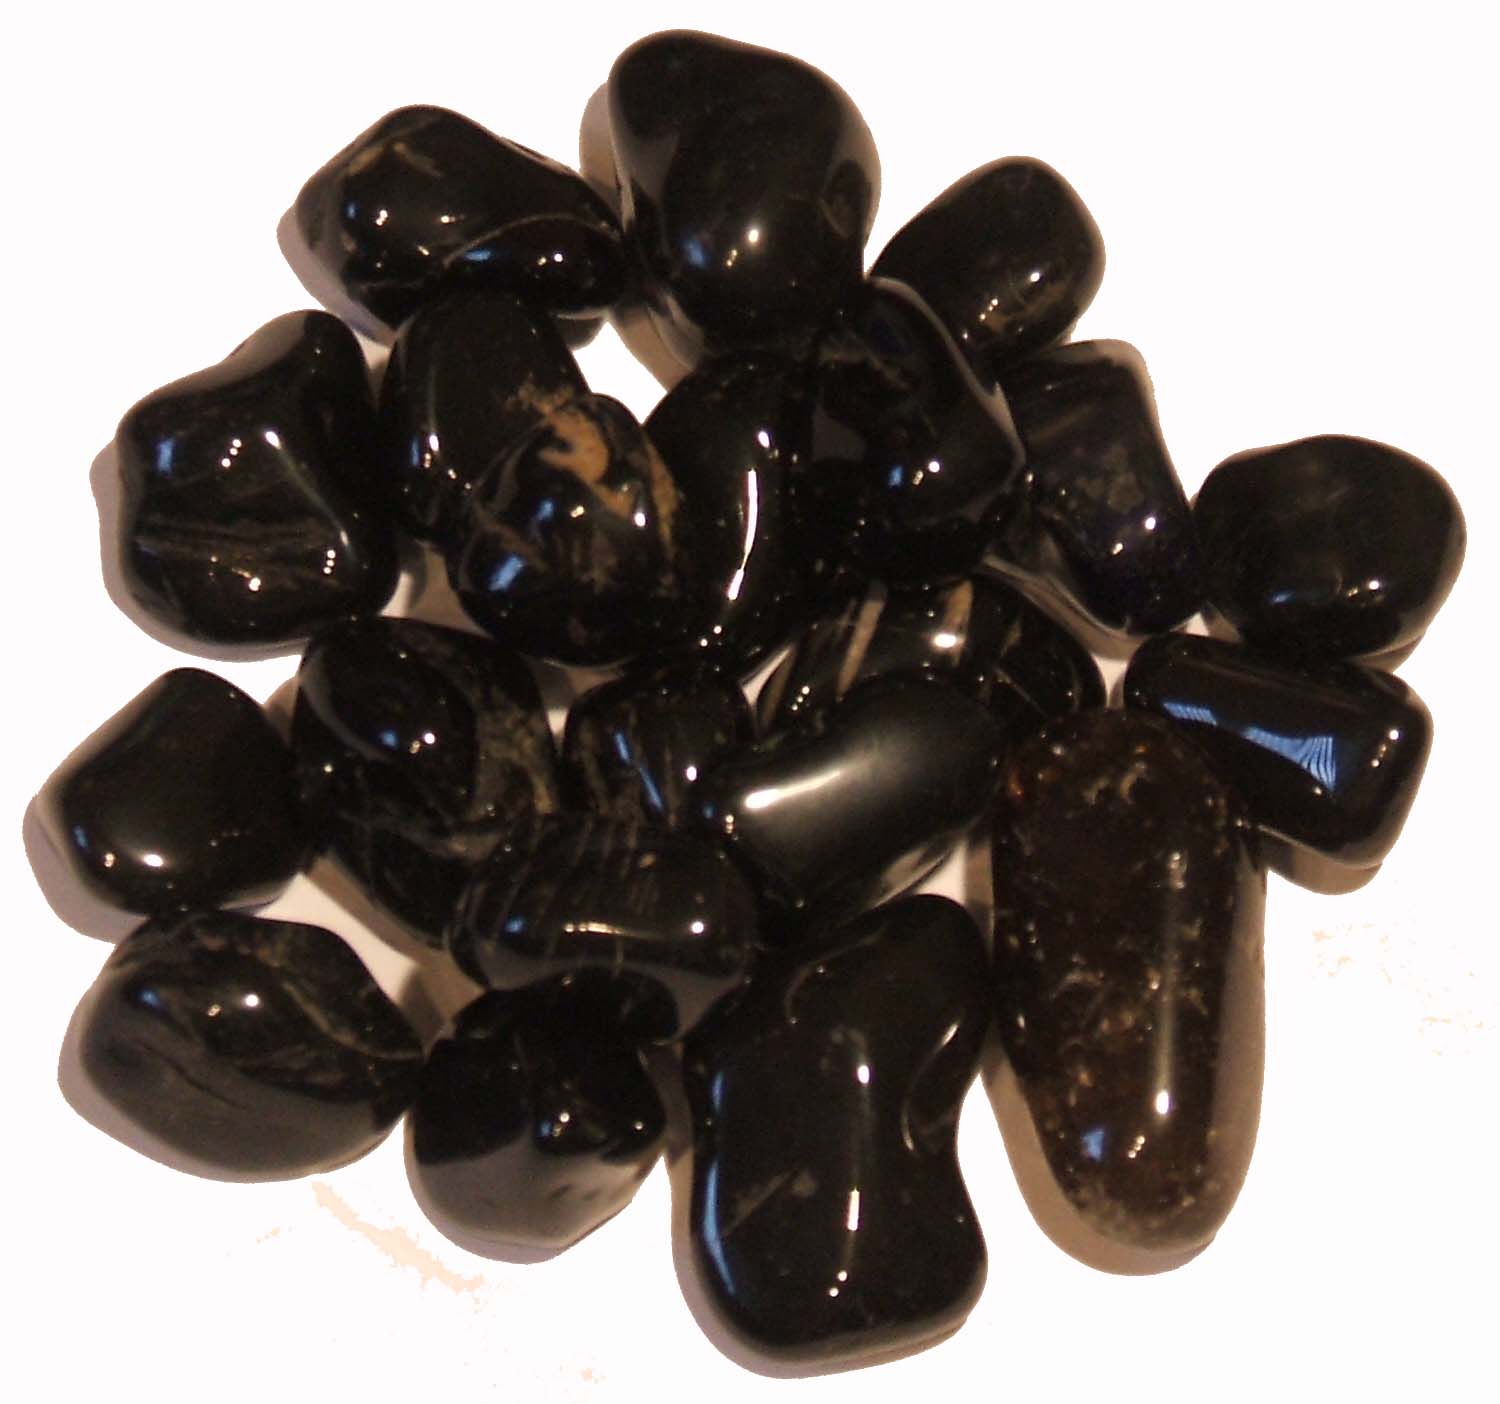 Black Onyx by Kanak Export, Black Onyx from Jaipur RJ India ID - 199844.